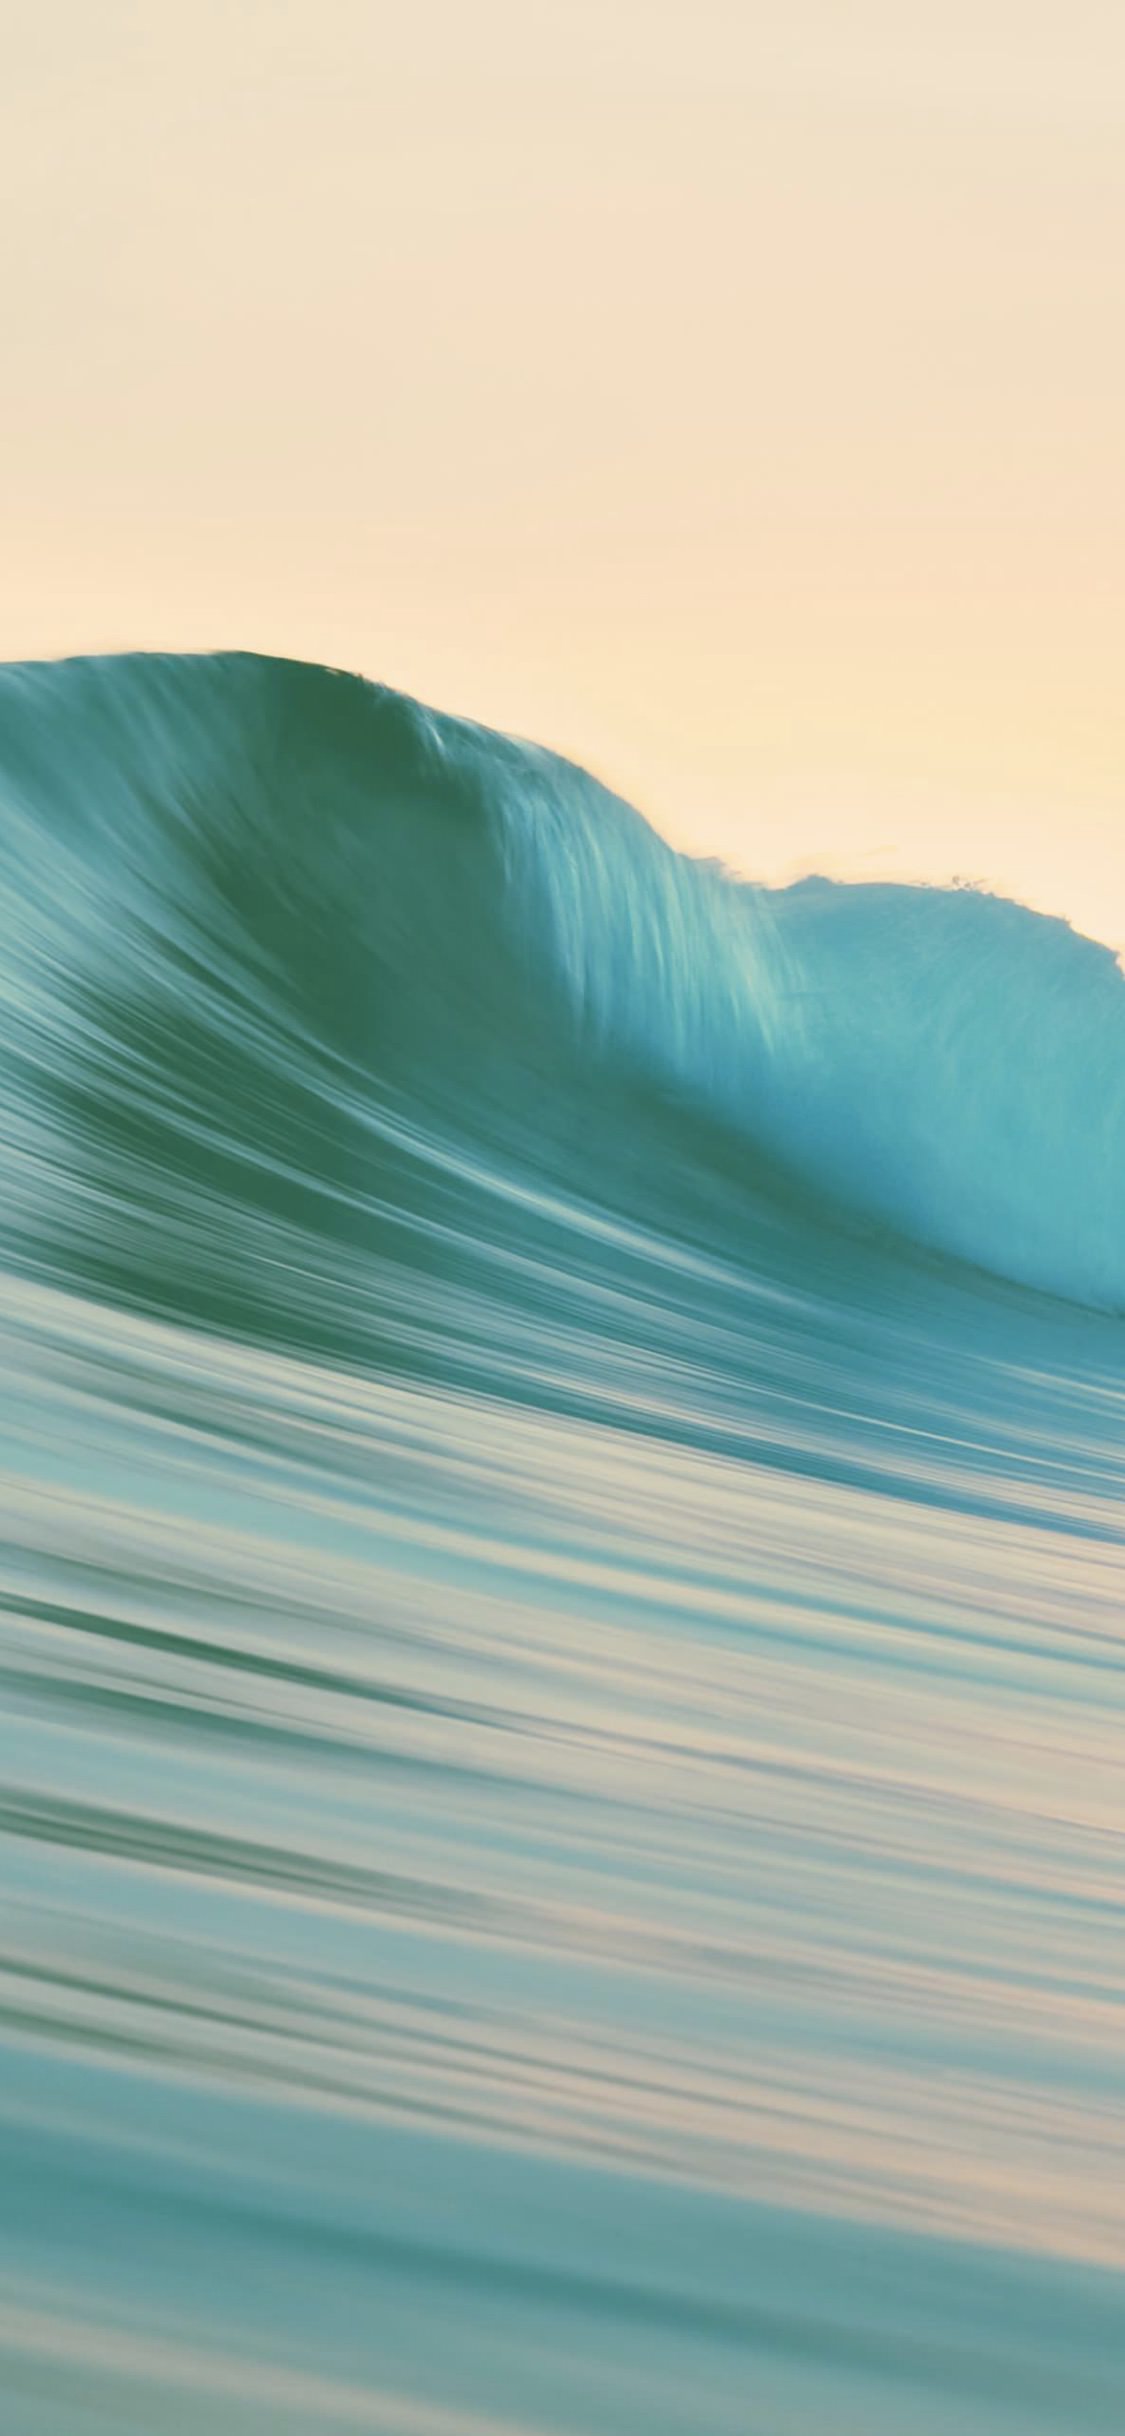 Iphone X Wallpaper Waves